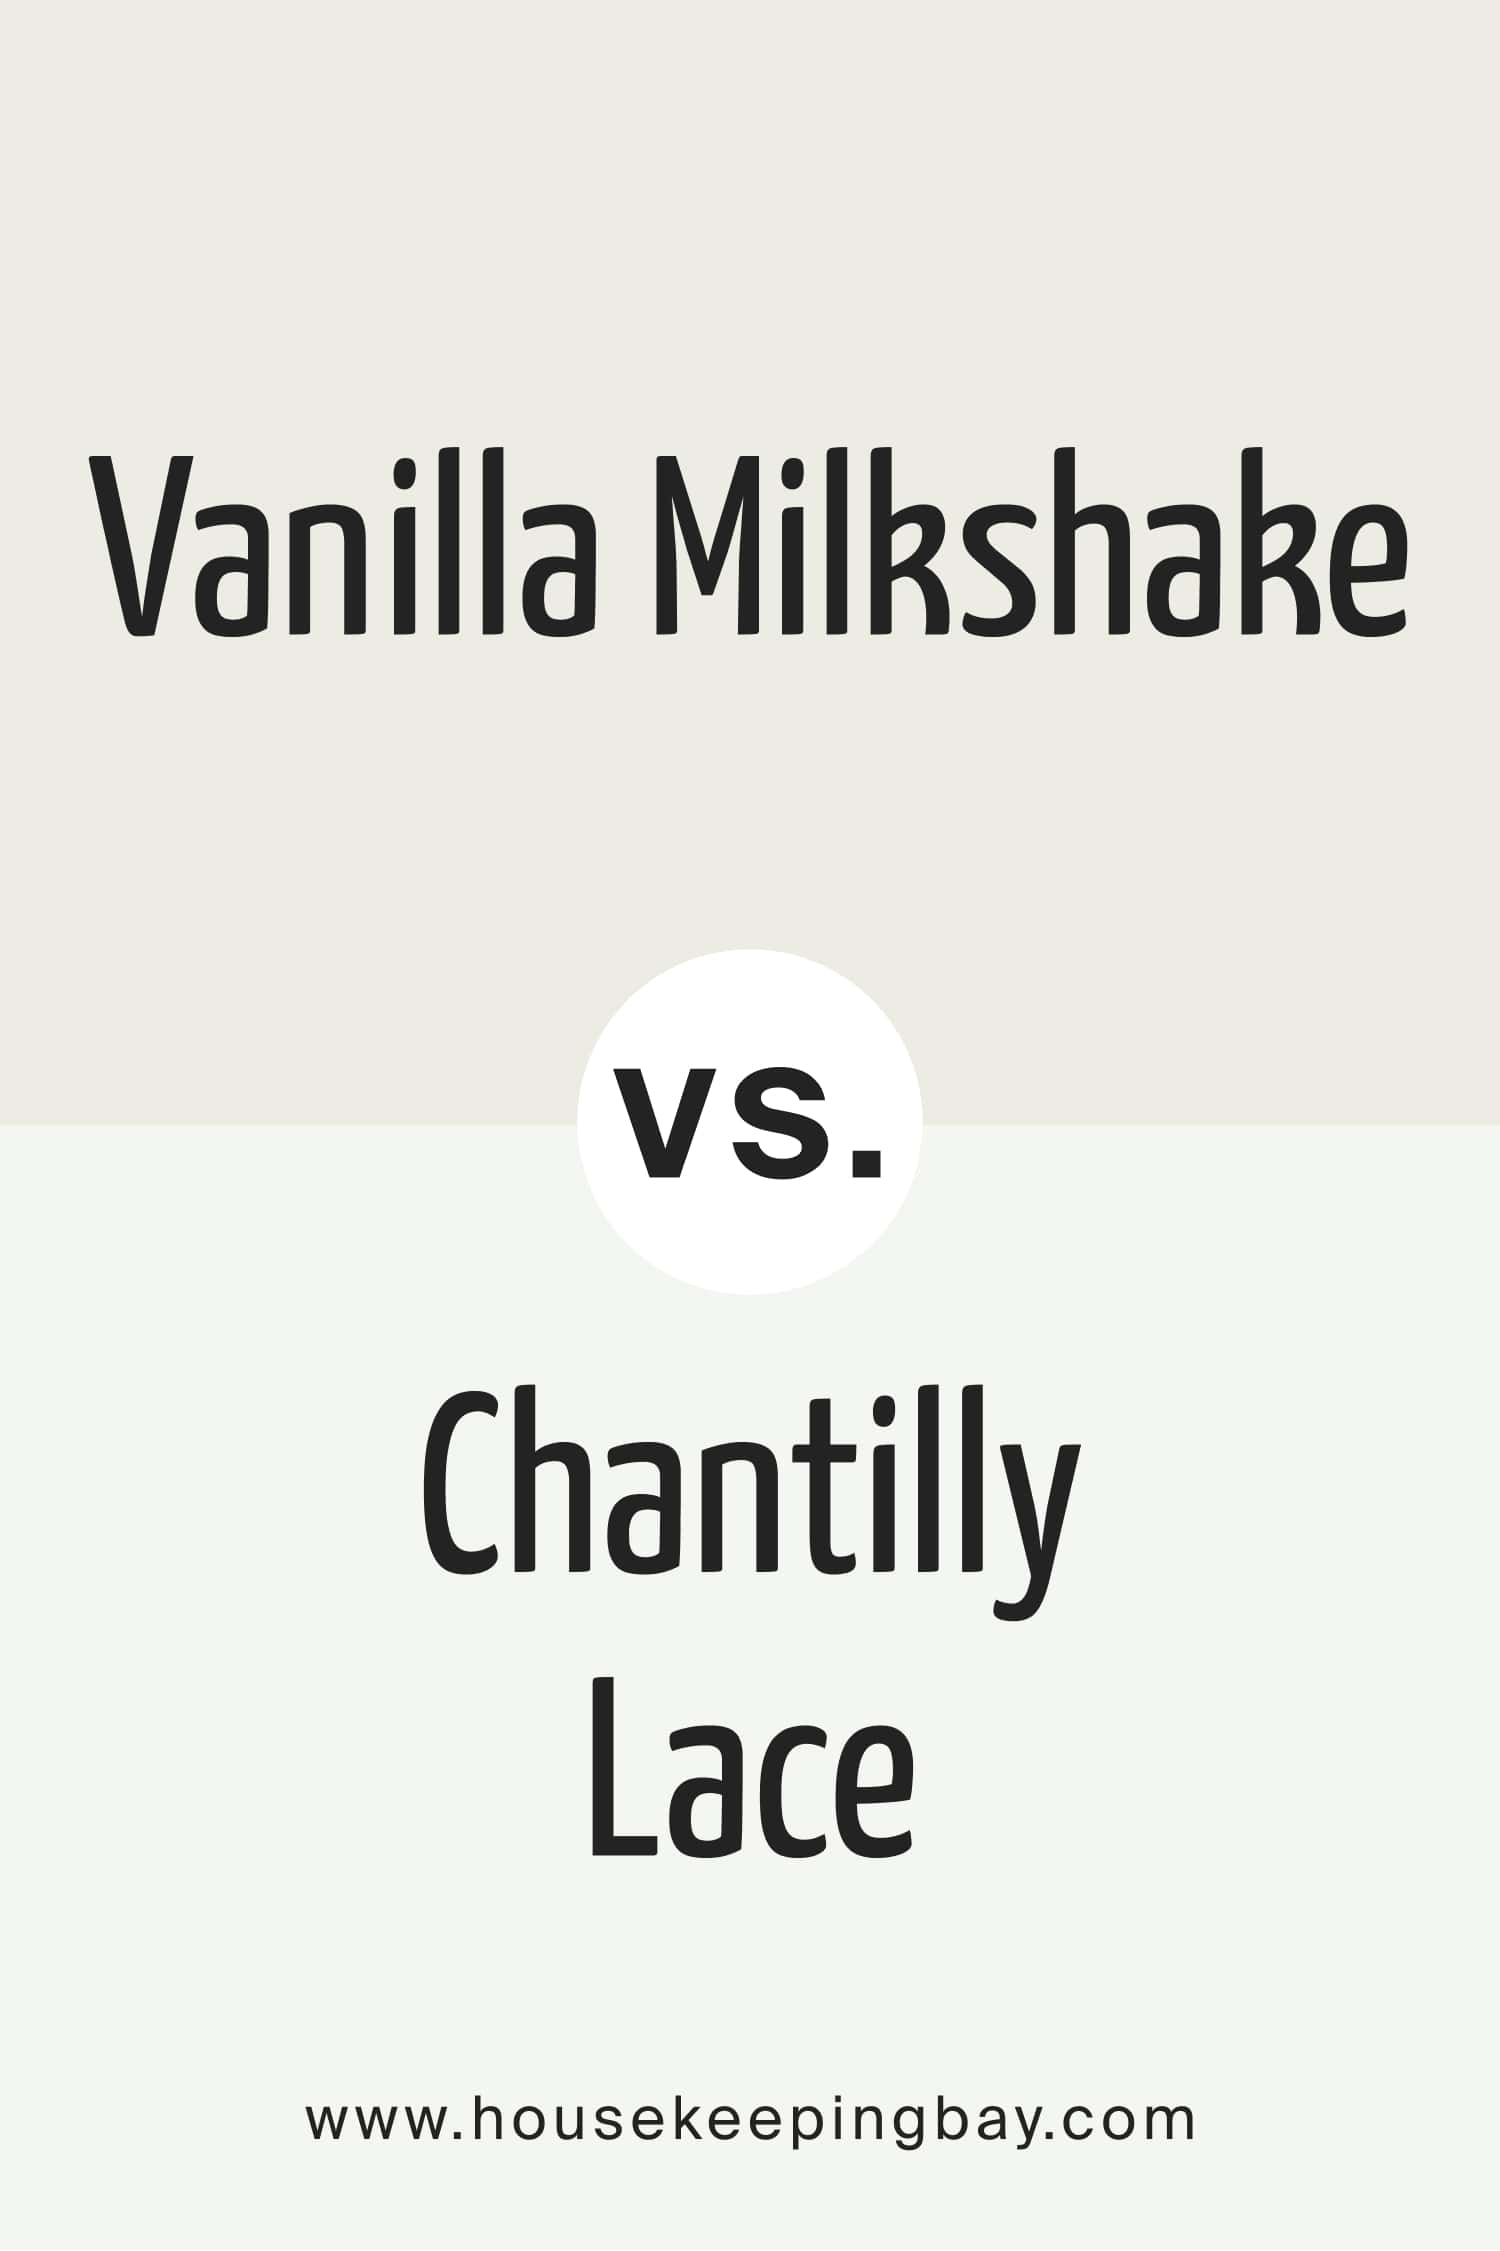 Vanilla Milkshake vs Chantilly Lace